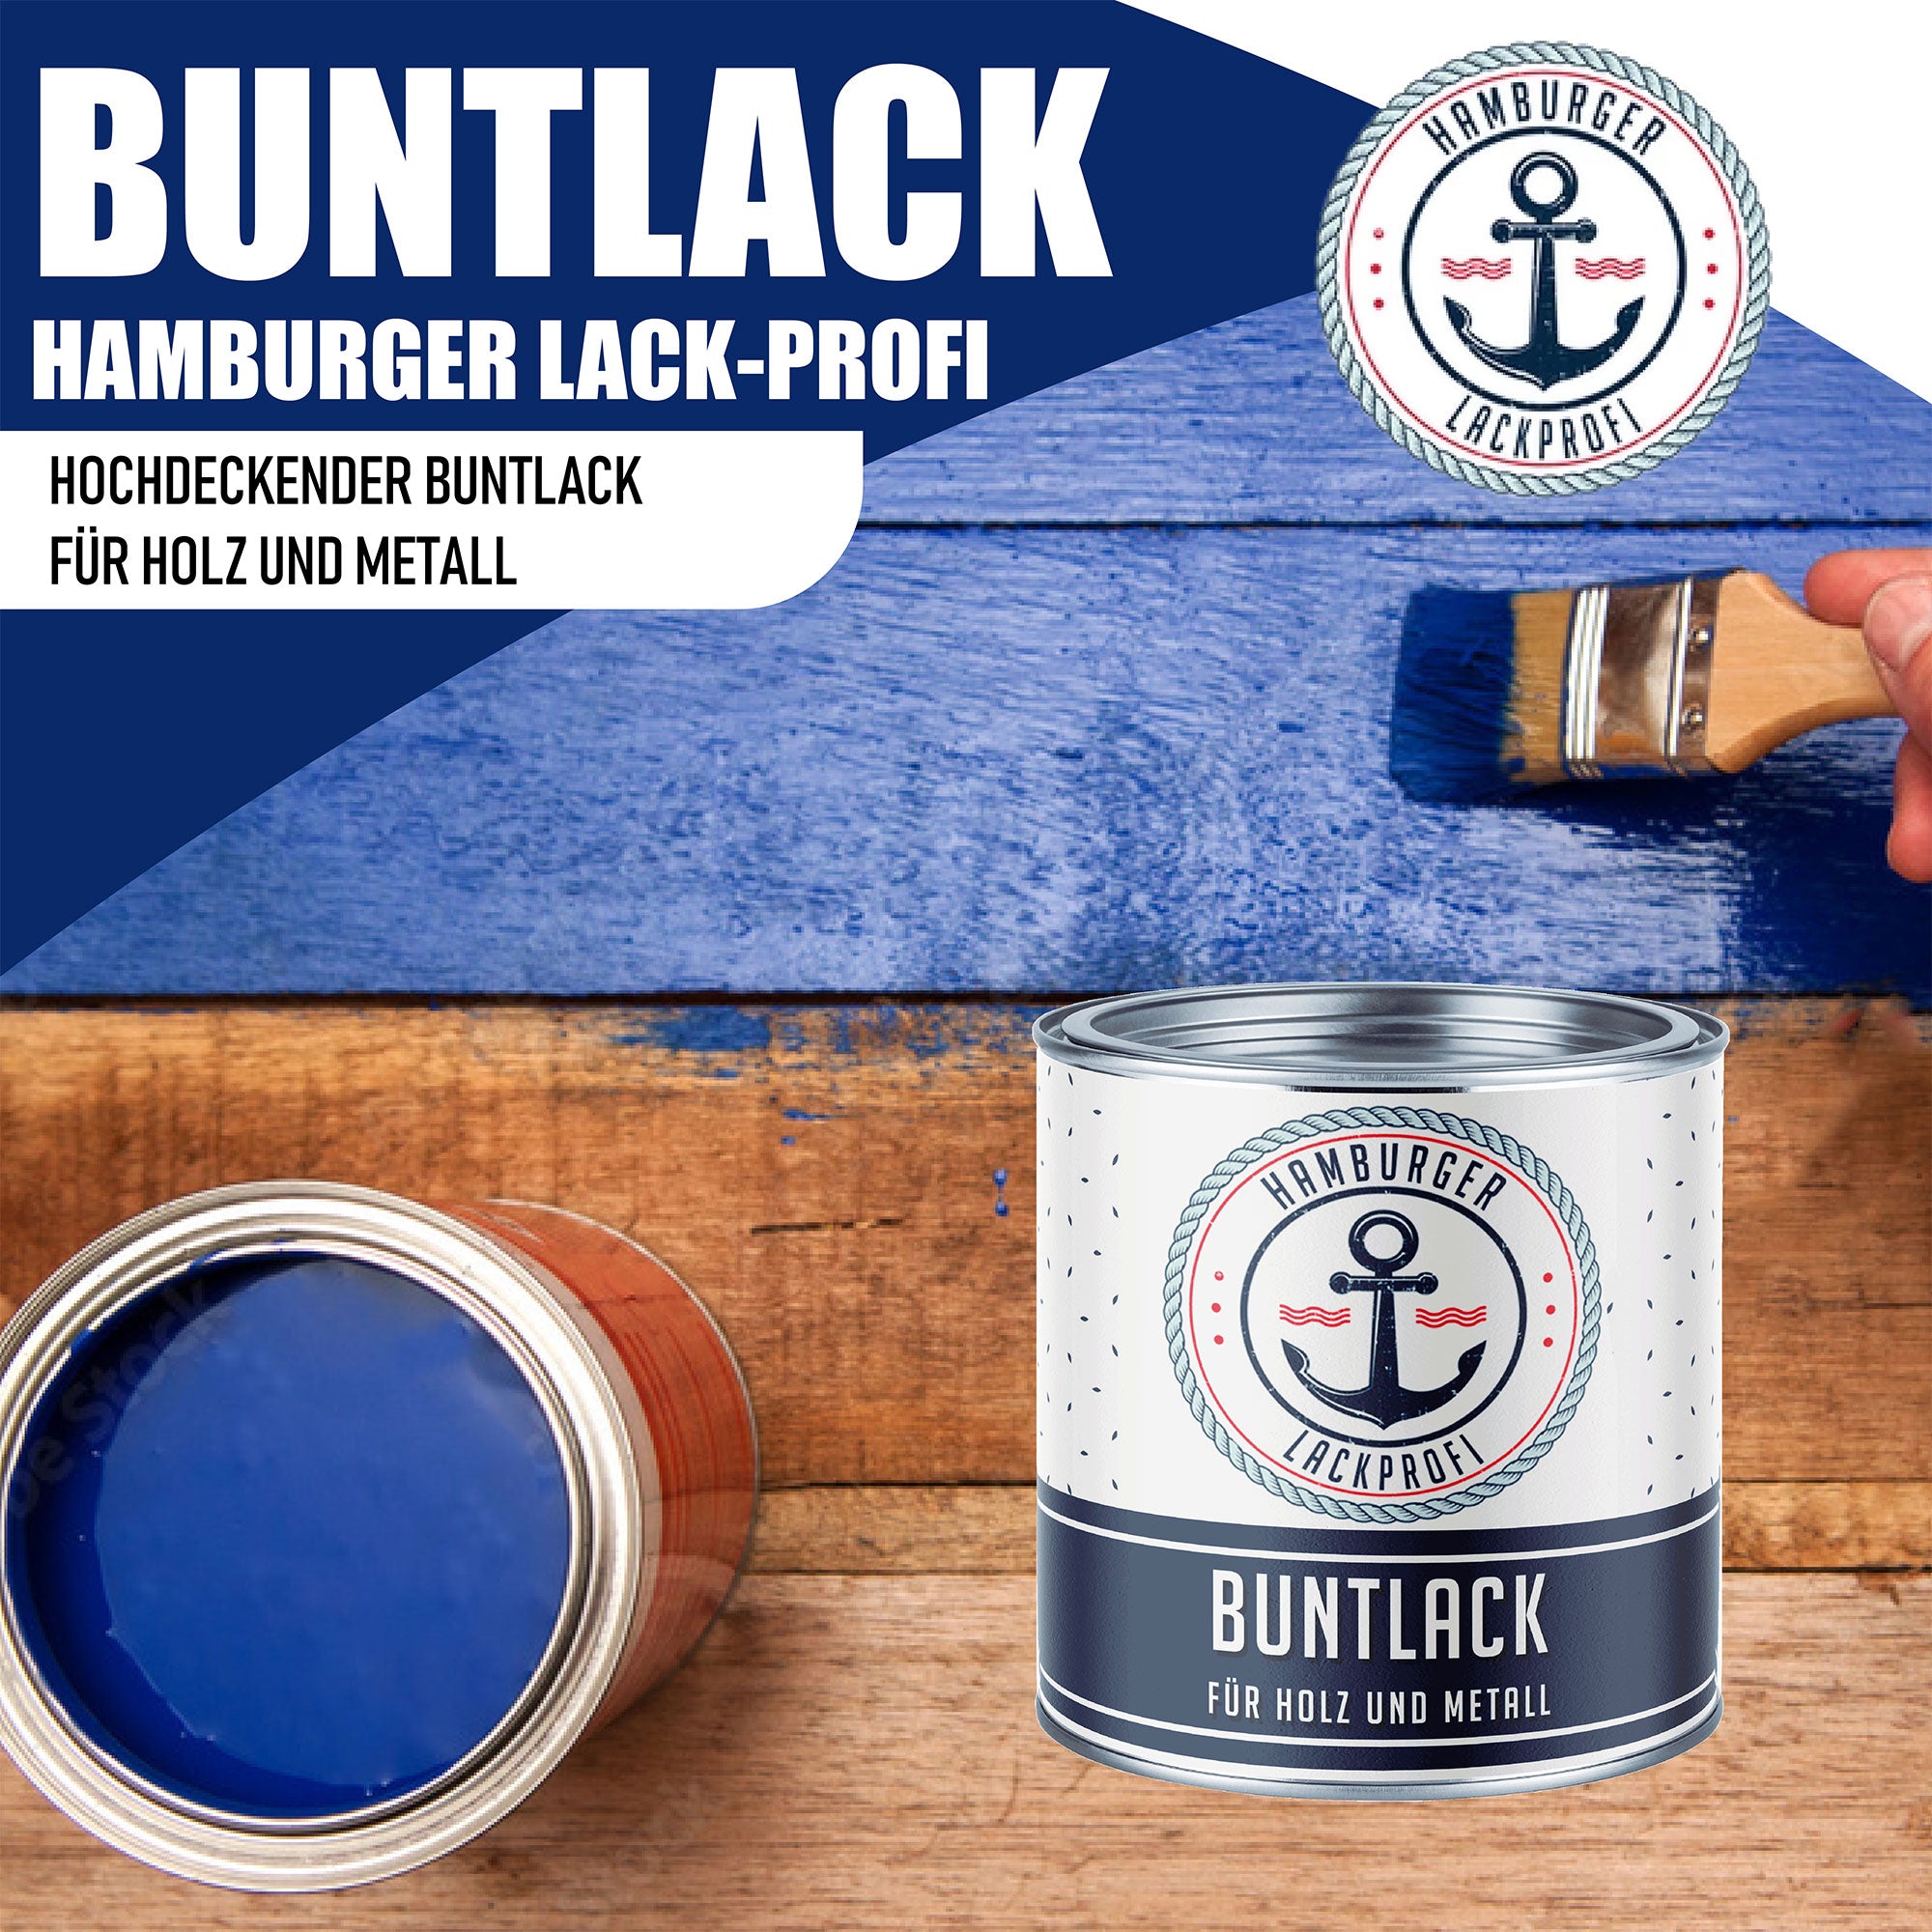 Hamburger Lack-Profi Buntlack Anthrazitgrau RAL 7016 - Robuster Kunstharzlack